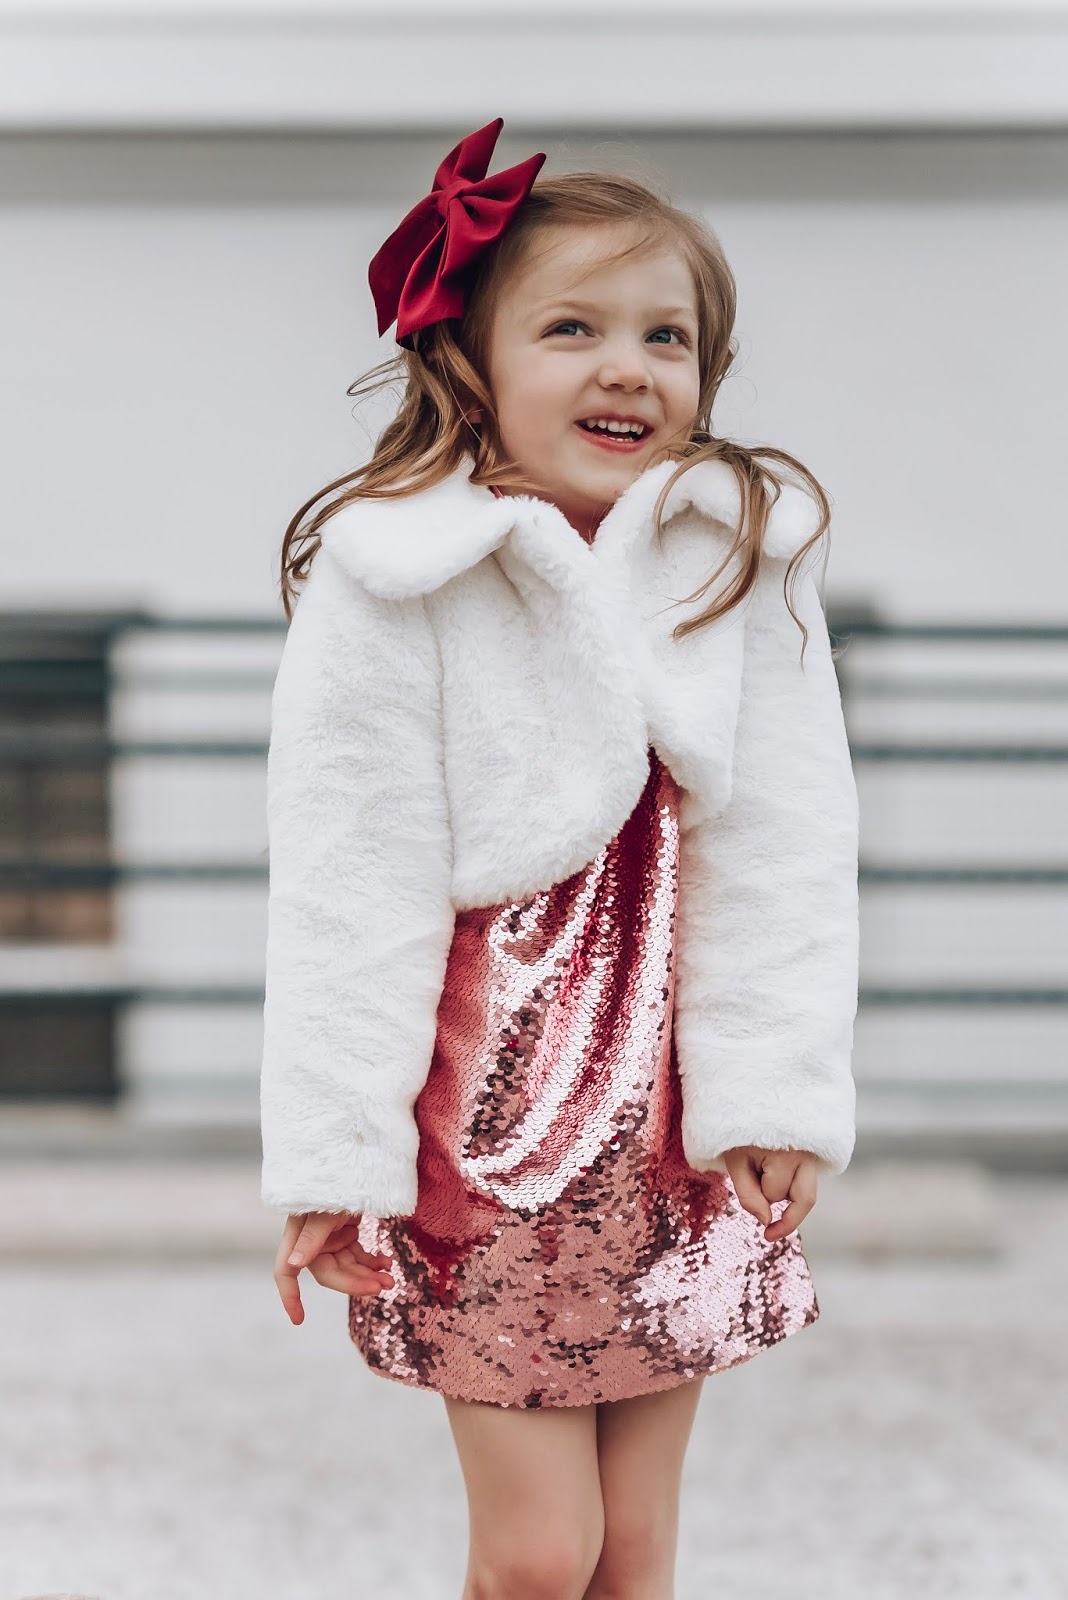 Reflecting on 2019 - NYE Style - Pink Sequins, Burgundy and white faux fur - Something Delightful Blog #NYEStyle #ReflectingOn2019 #SparkleInTheNewYear #MommyandMe